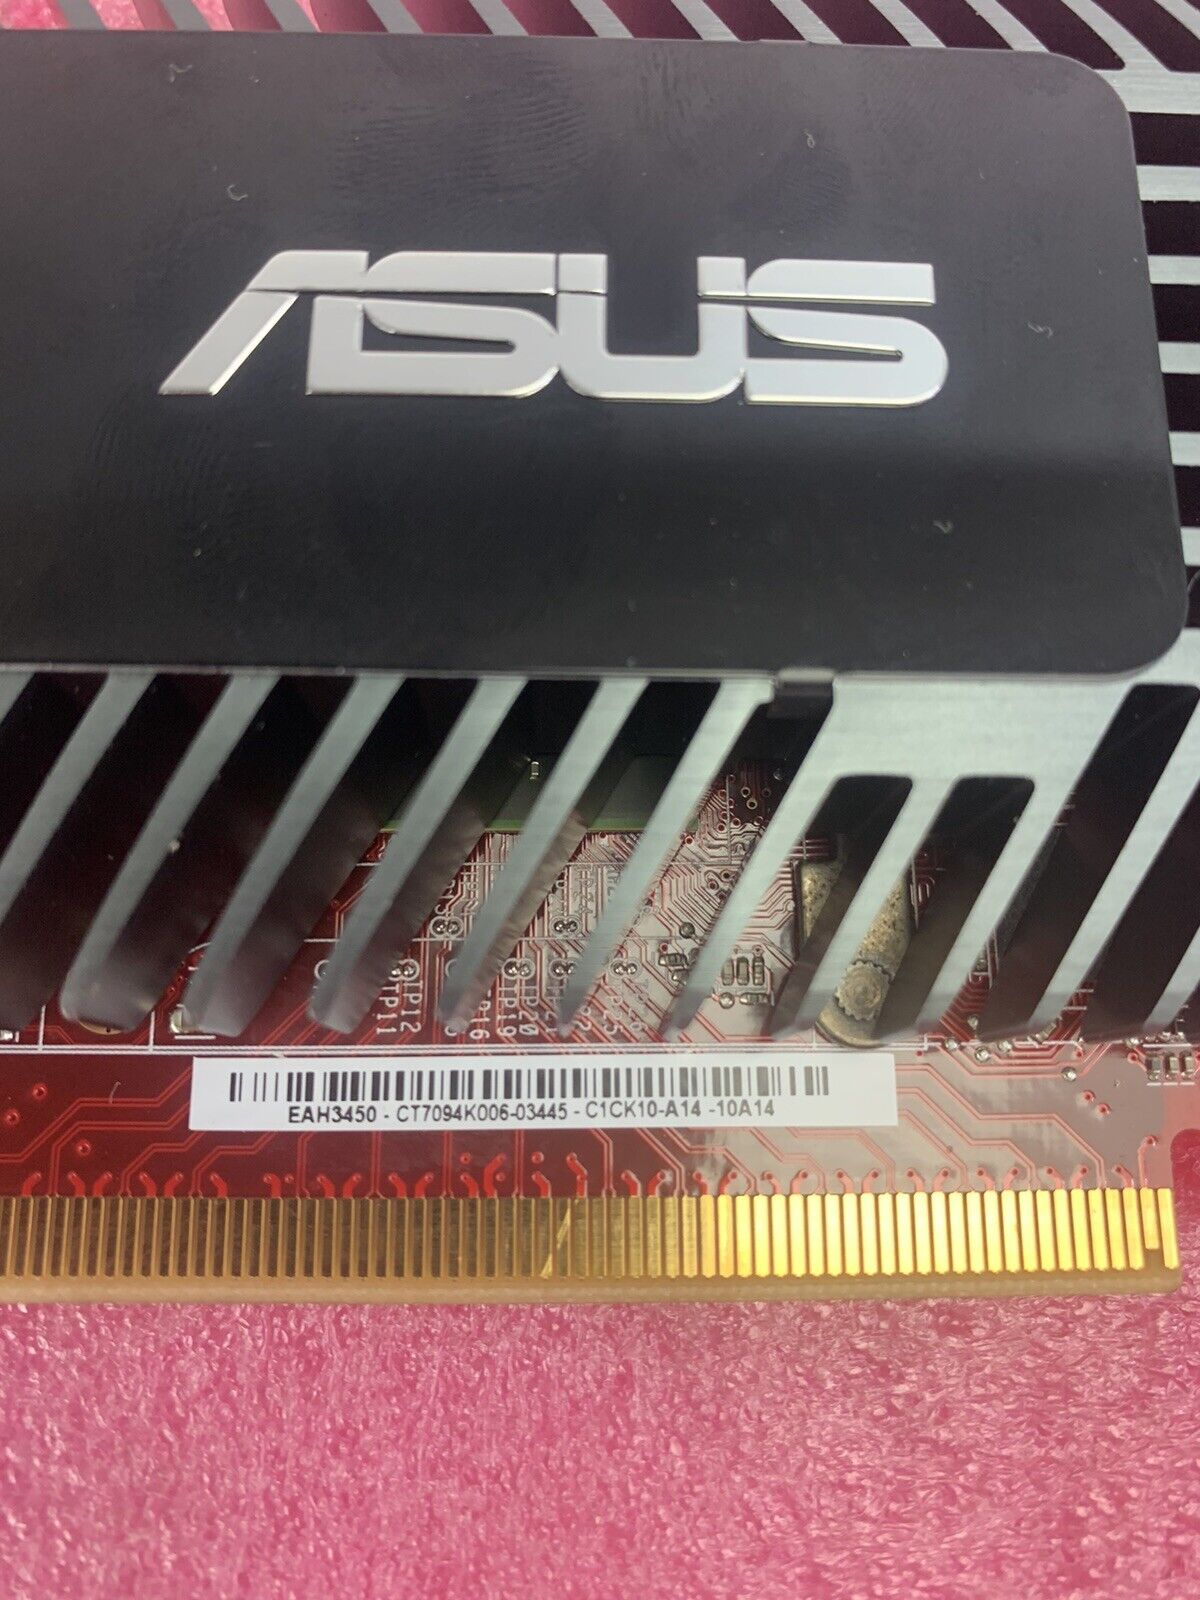 ASUS EAH3450/HTP/256M Radeon HD 3450 256MB GDDR2 Graphics Card